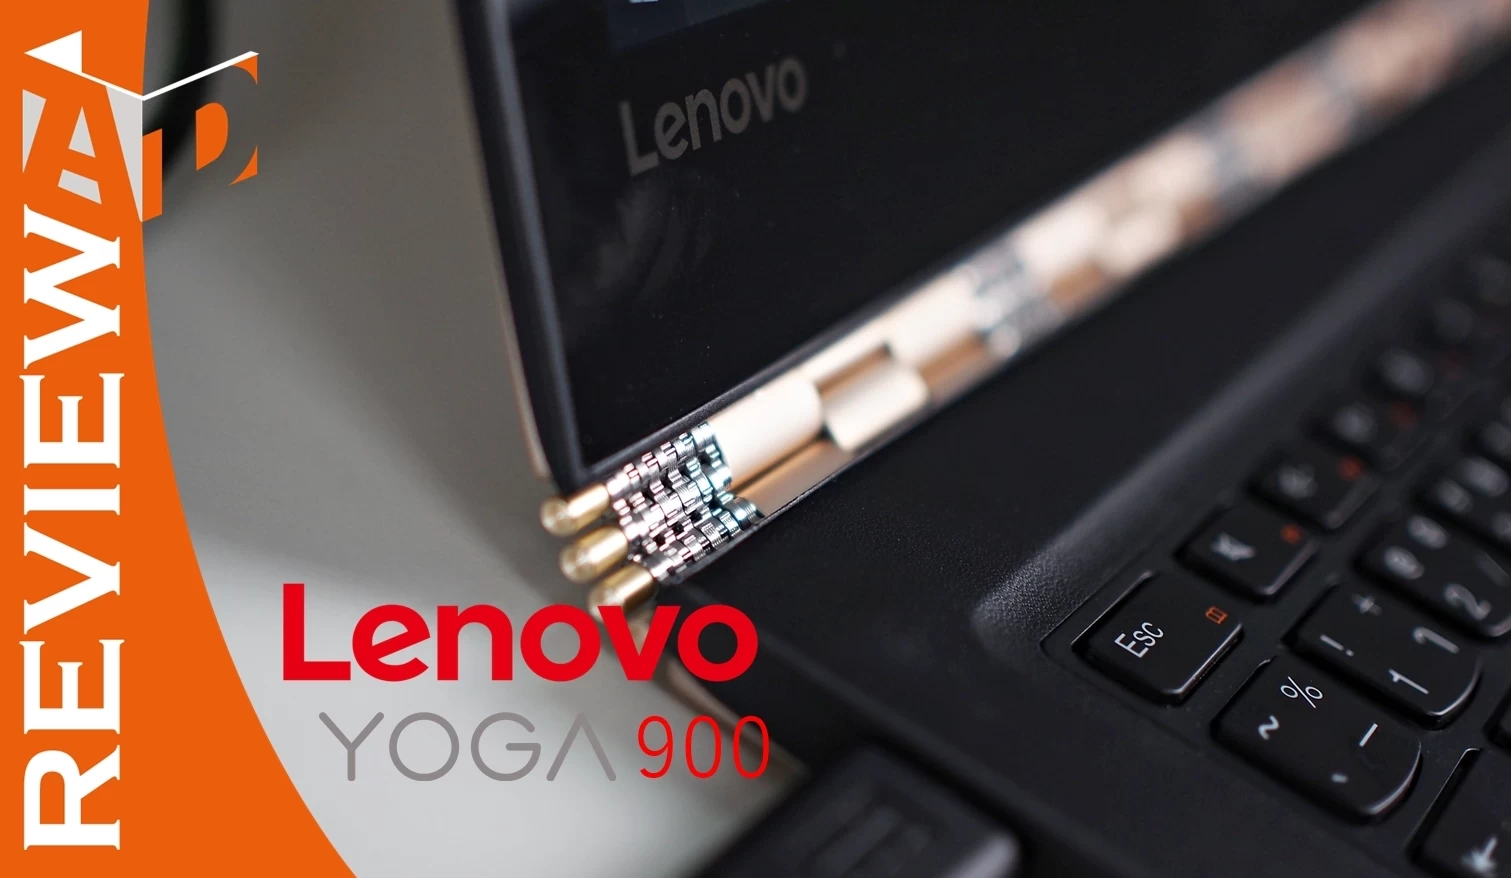 review Lenovo yoga 900 | โน๊ตบุ๊ค | มินิรีวิว Lenovo Yoga 900 อัลตร้าบุ๊คระดับสูง  หรู แรง แพงสมค่าตัว